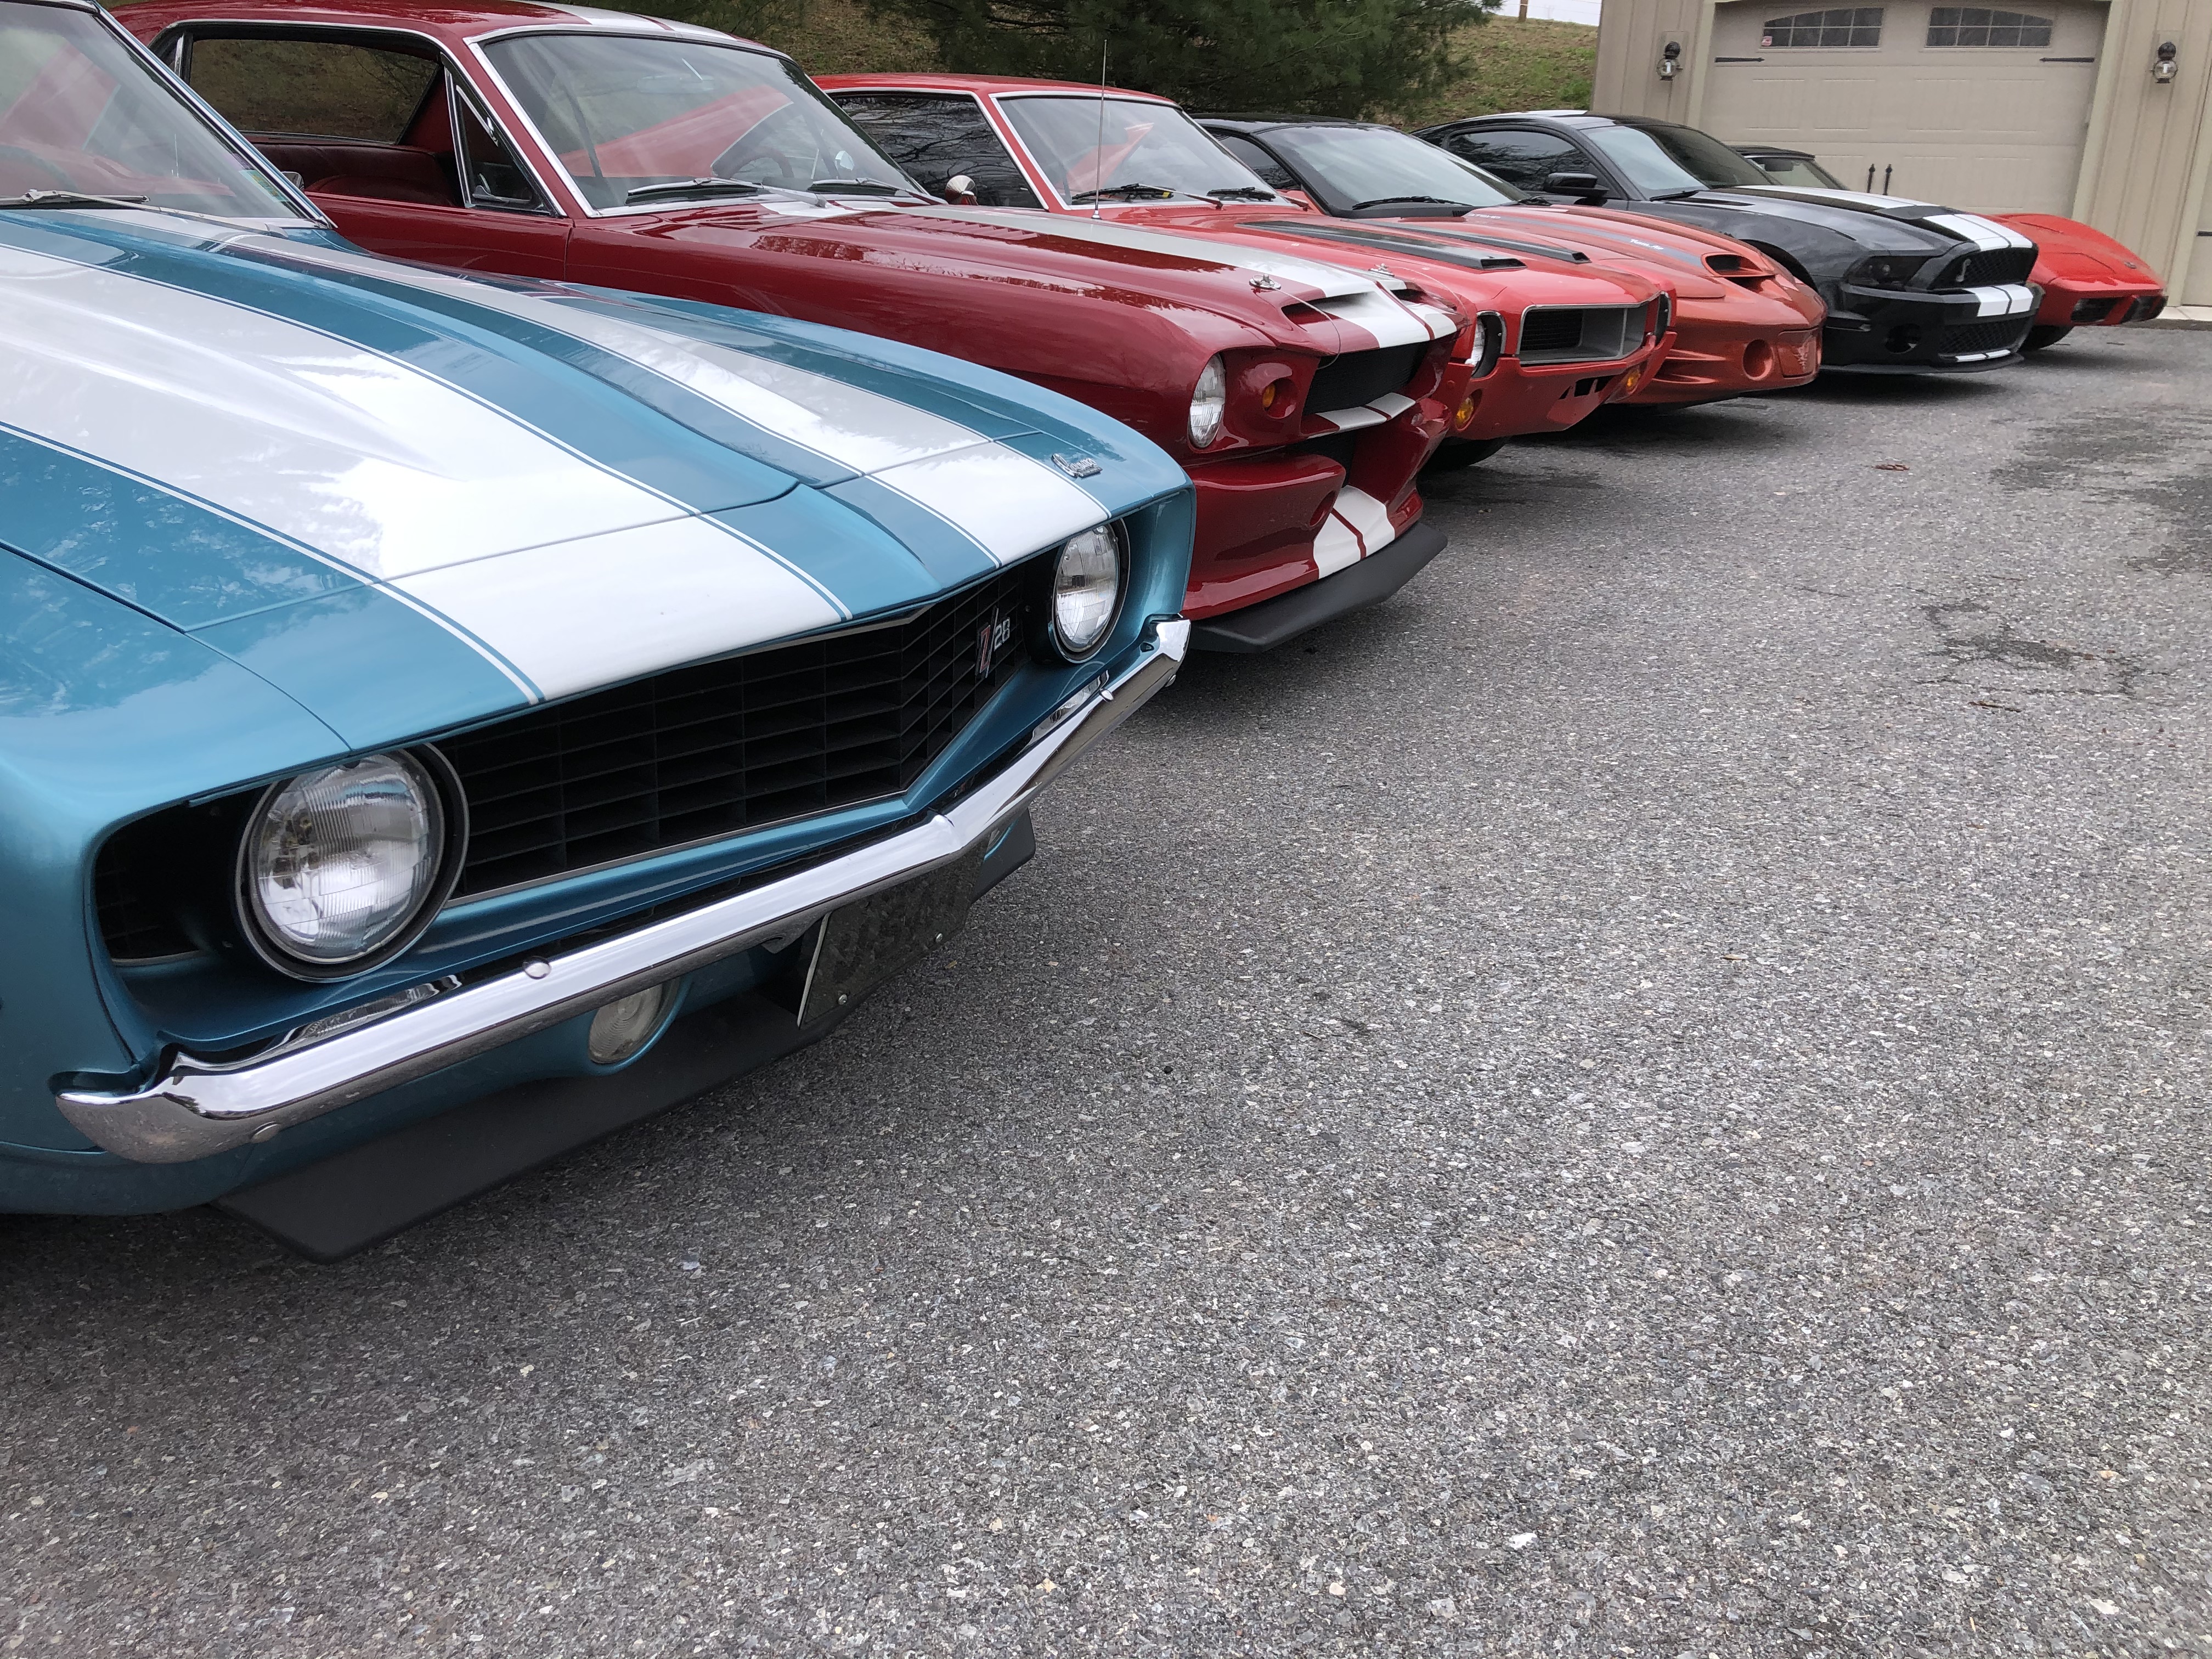 CK Classic Cars – Classic Car Restoration And Sales